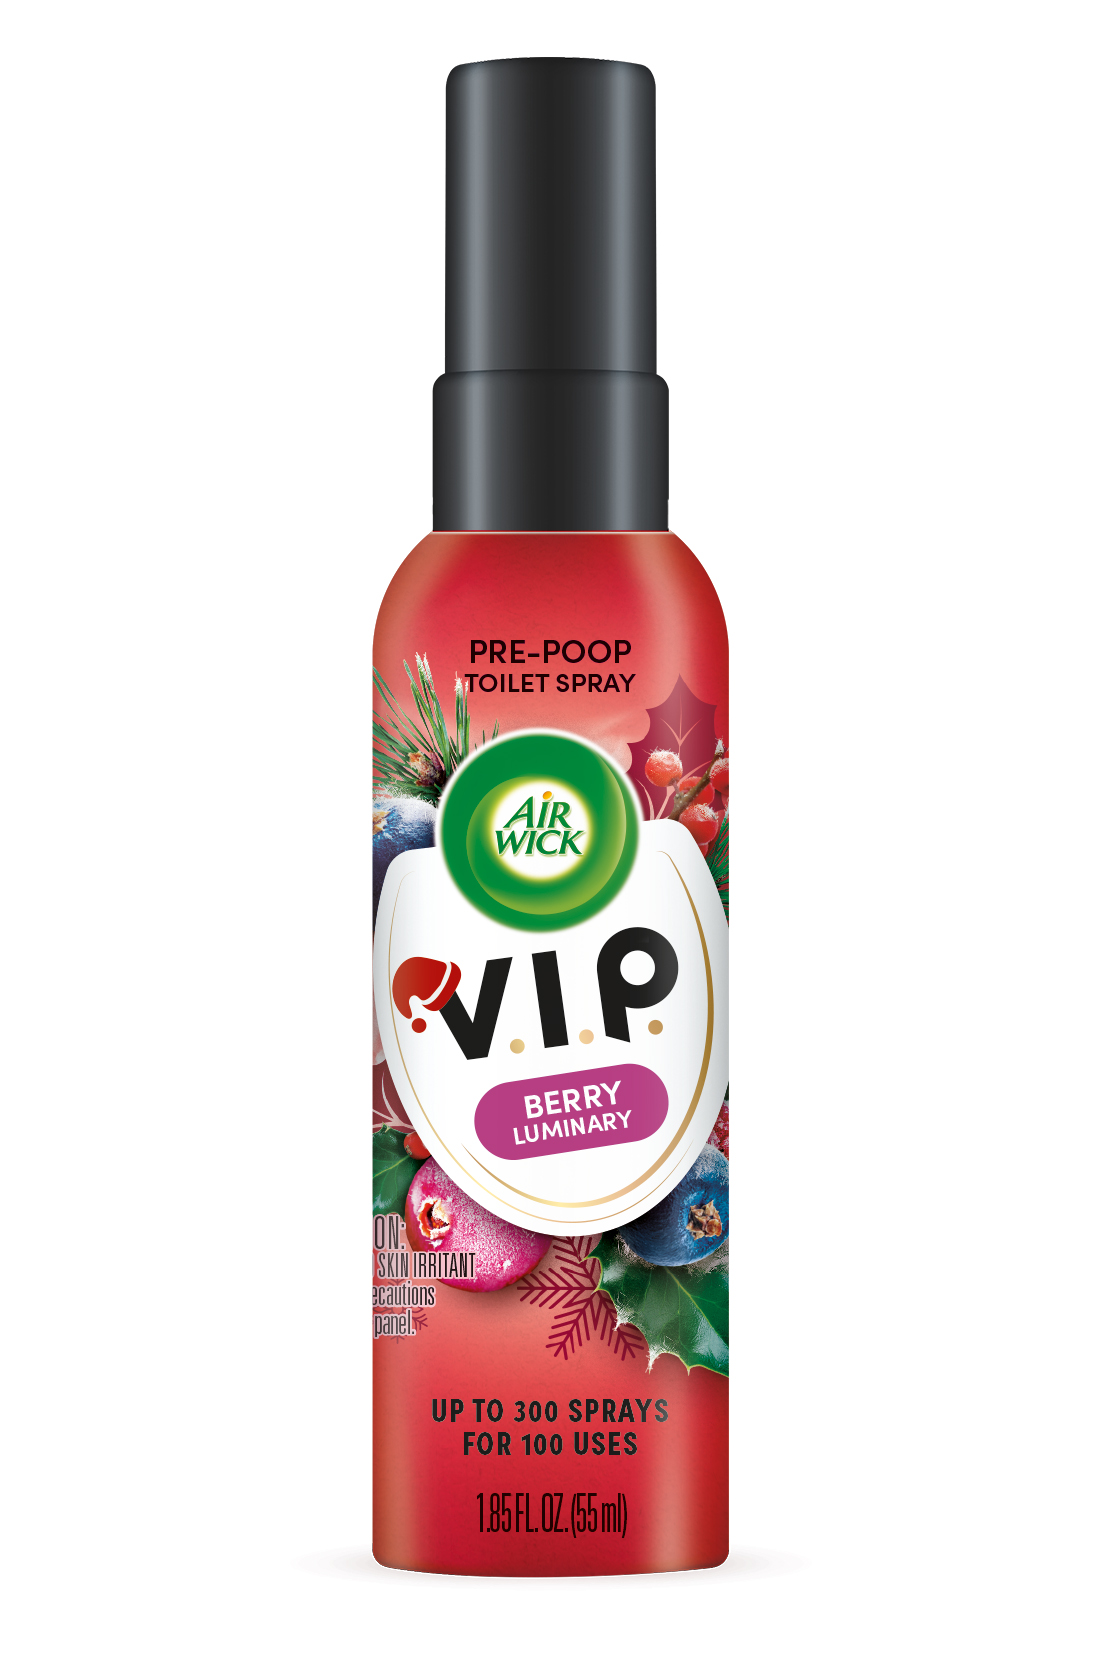 AIR WICK® VIP Pre-Poop Toilet Spray - Berry Luminary